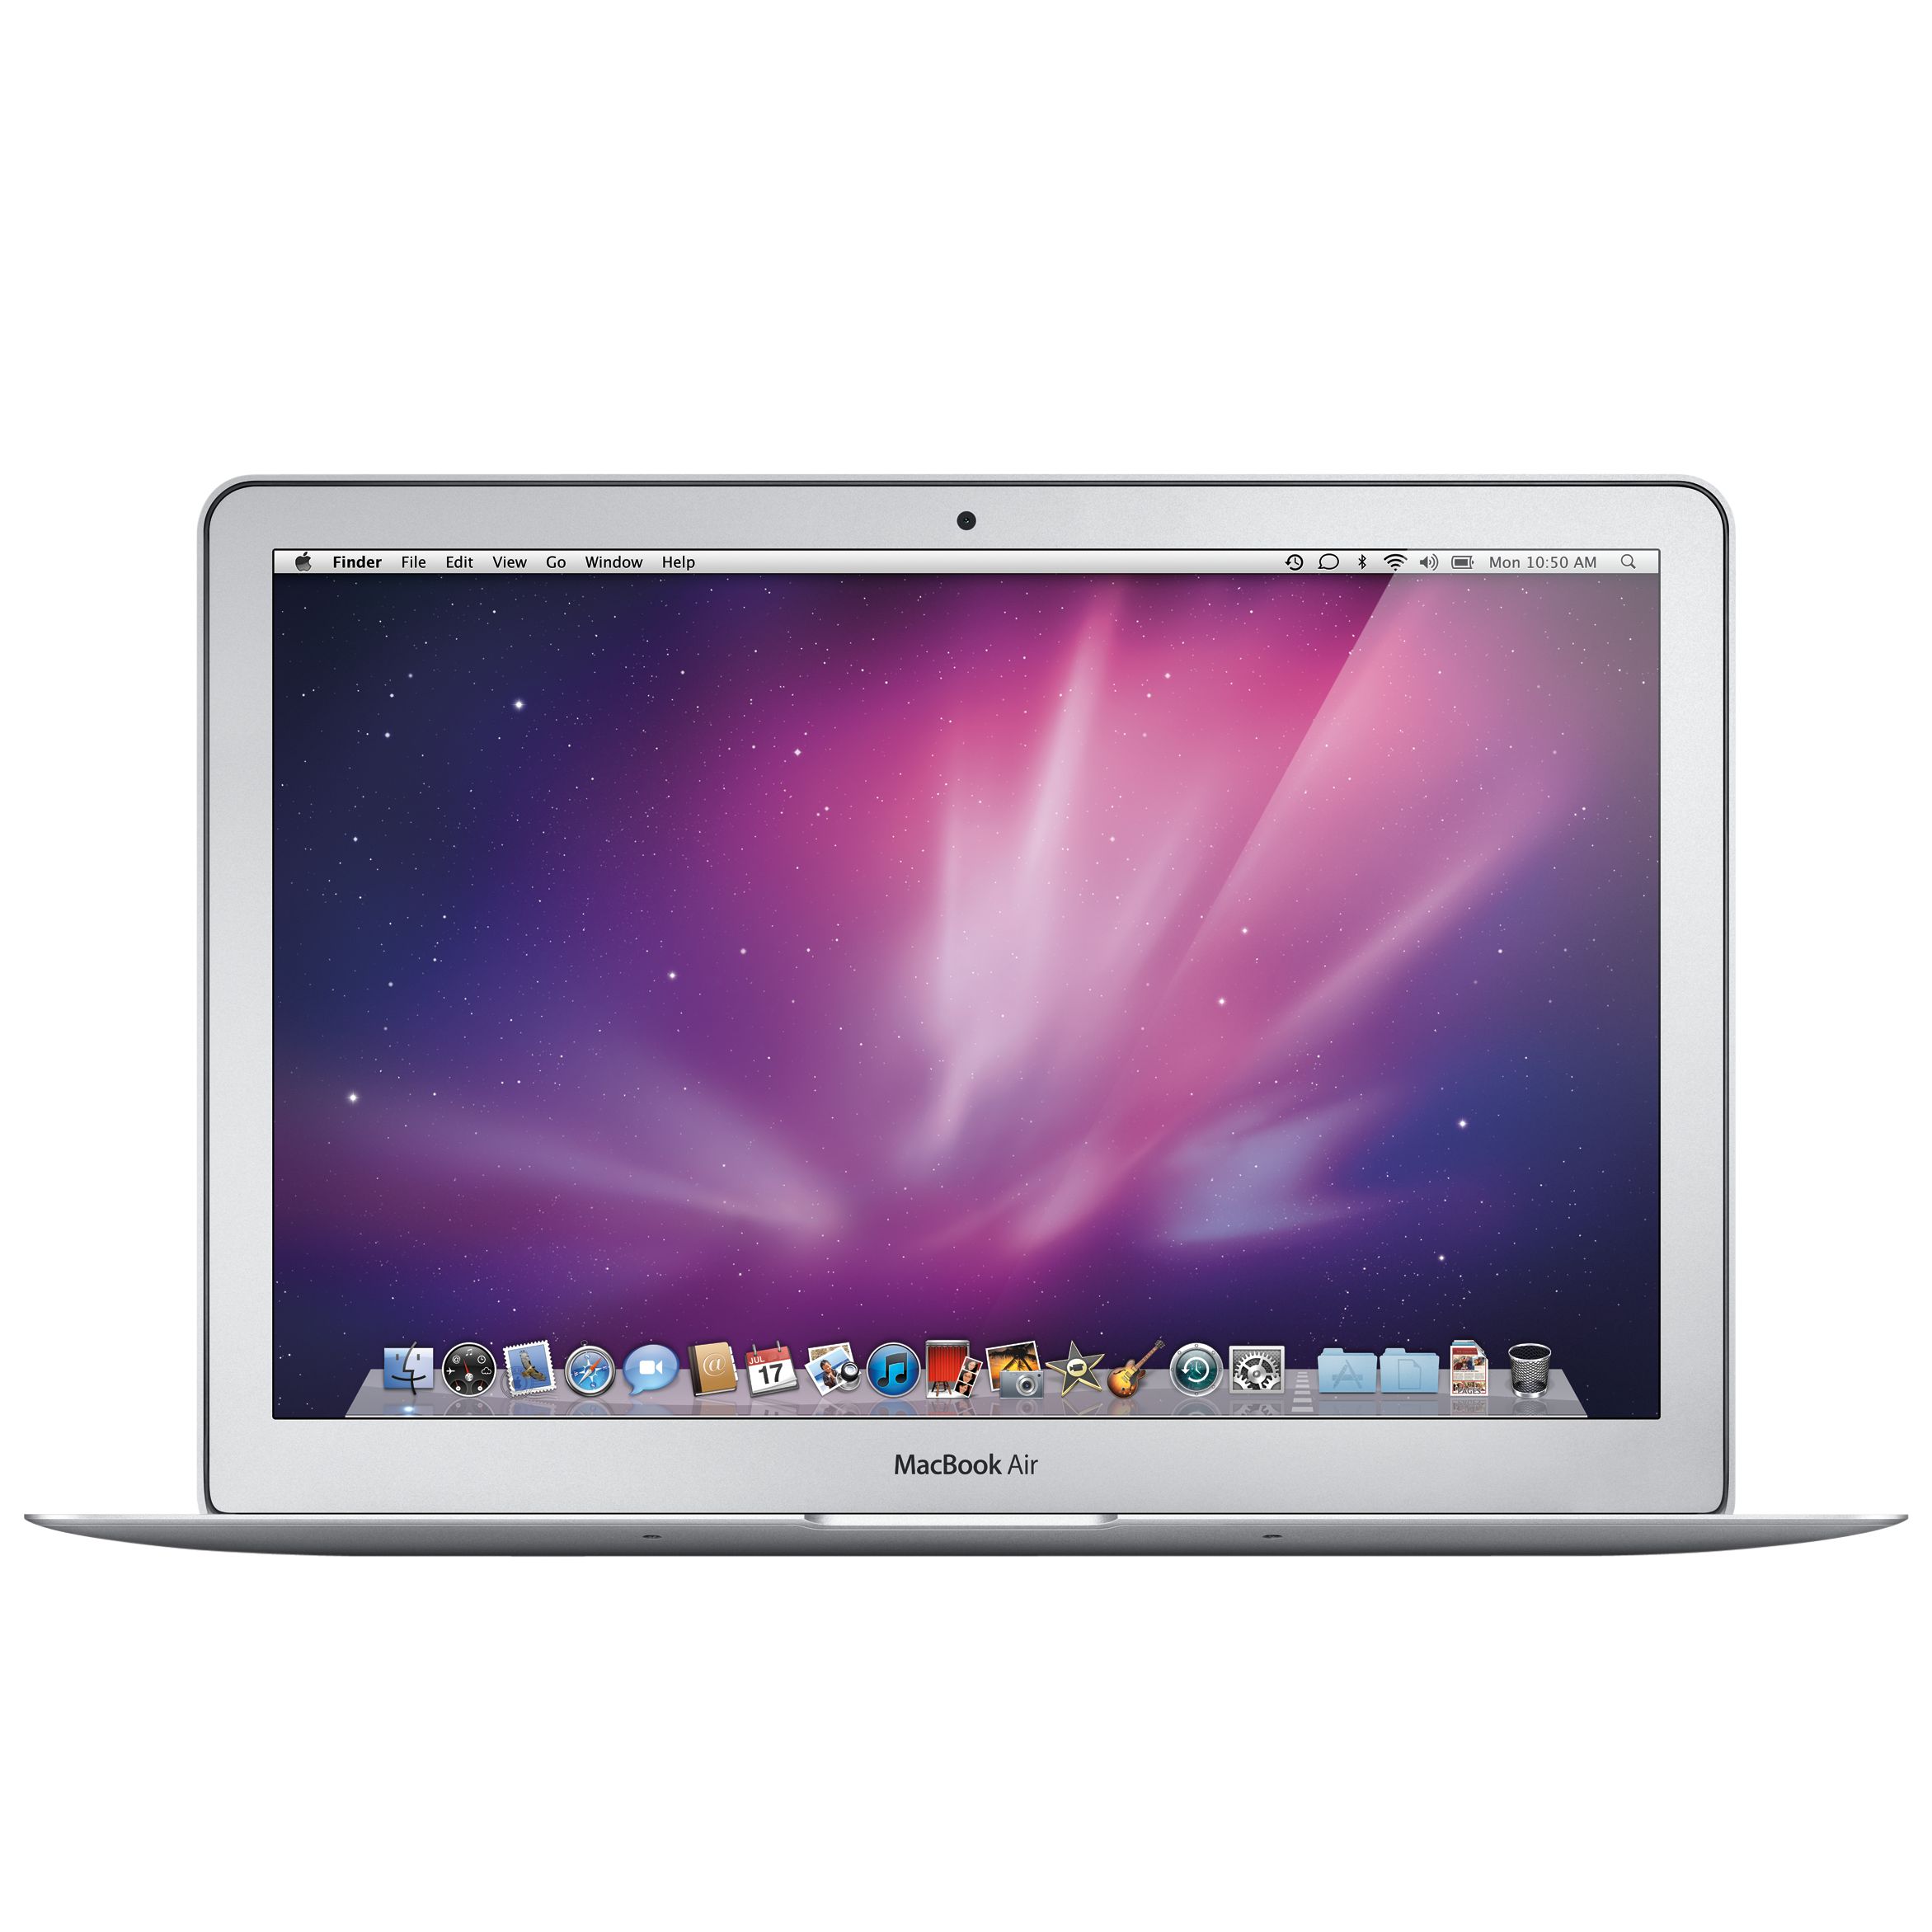 Apple MacBook Air, MC504B/A, Intel Core 2 Duo, 256GB, 1.86GHz, 2GB RAM with 13.3 Inch Display at John Lewis